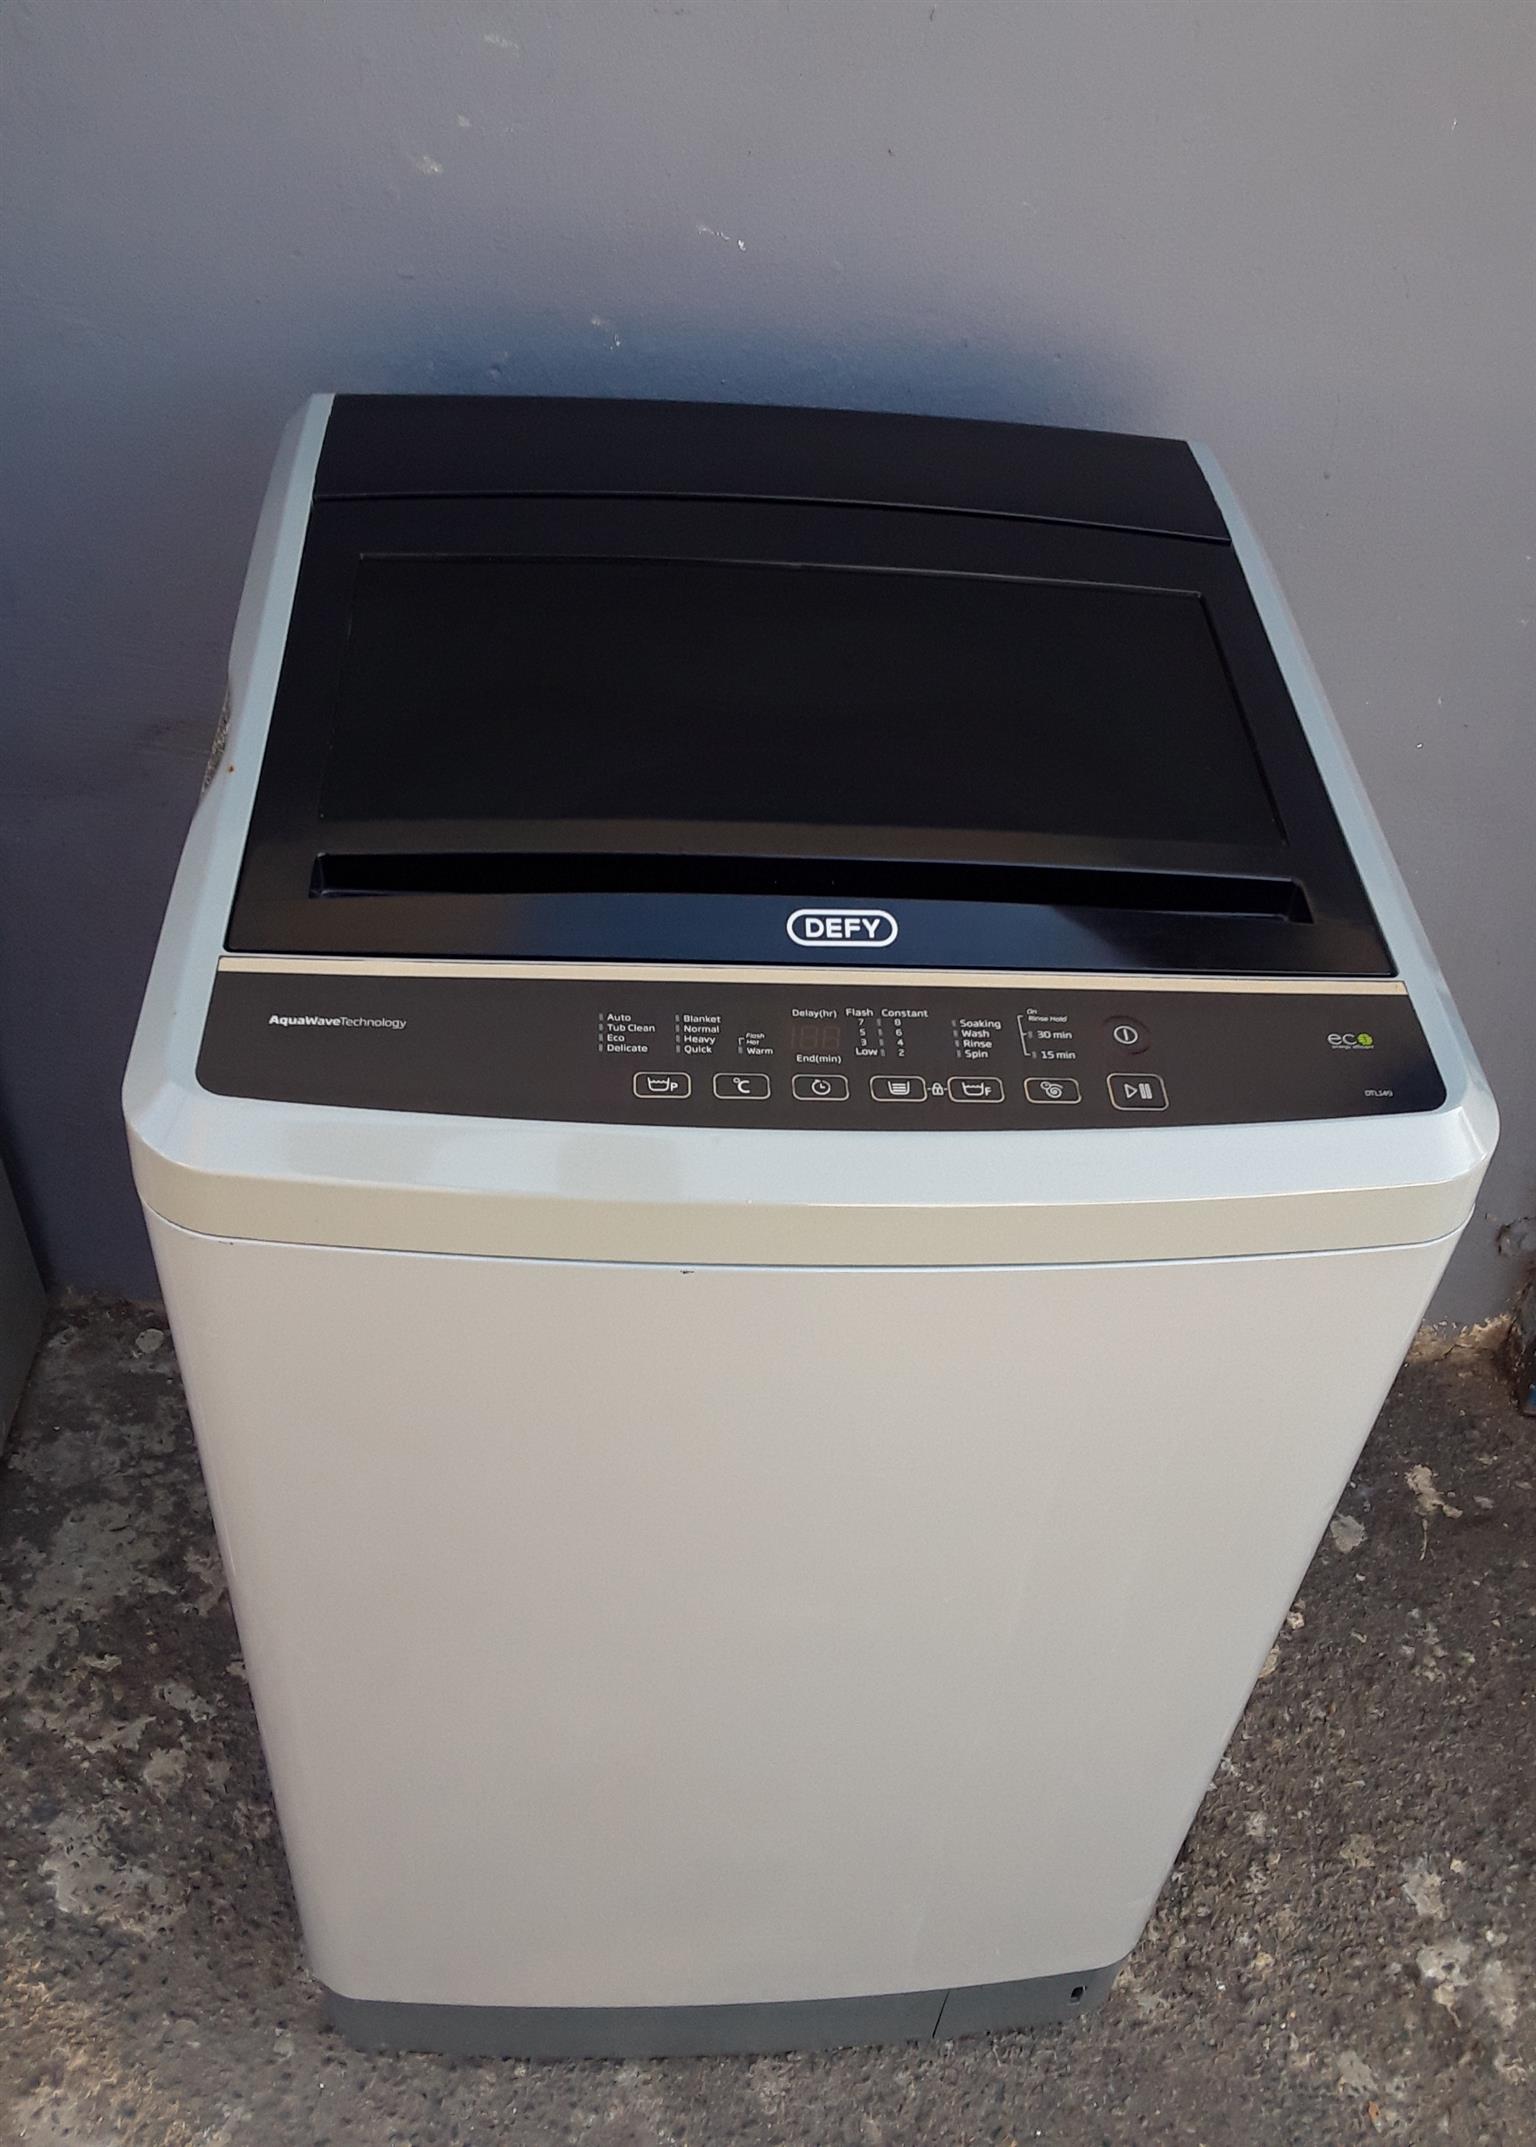 13kg Defy top load washing machine 